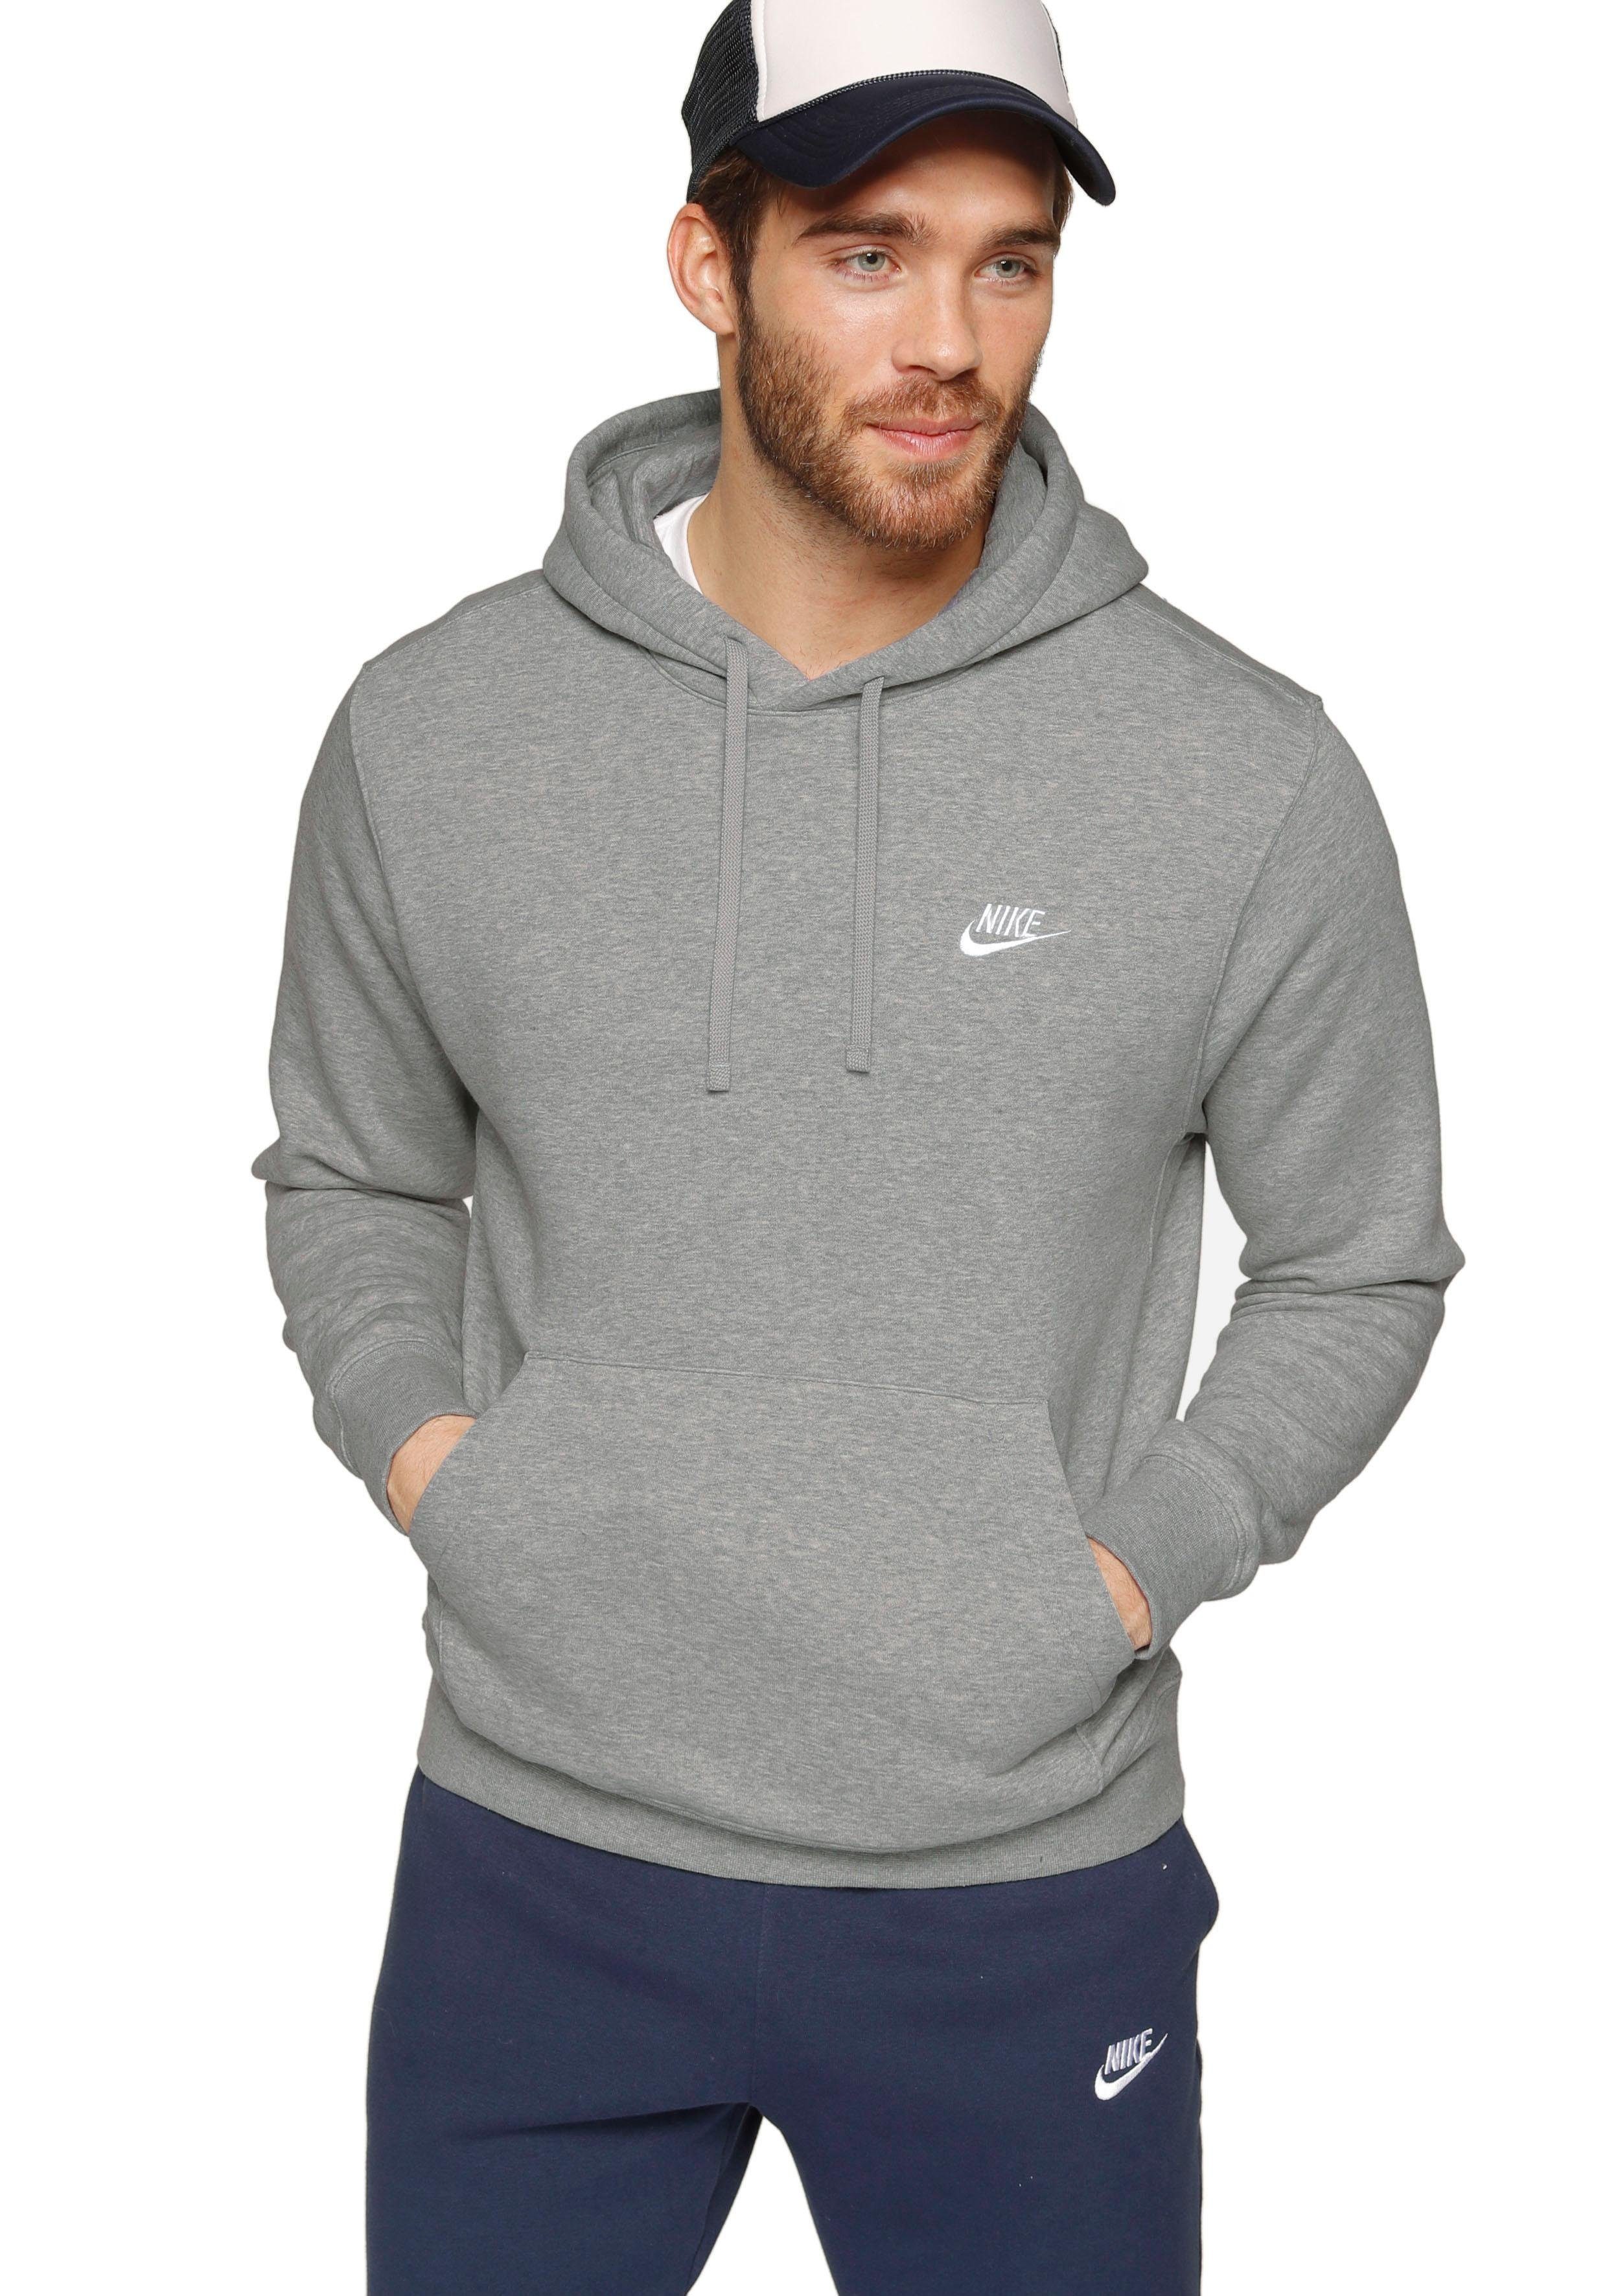 Nike Sportswear Herren Hoodies kaufen » Herren Kapuzenpullover | OTTO